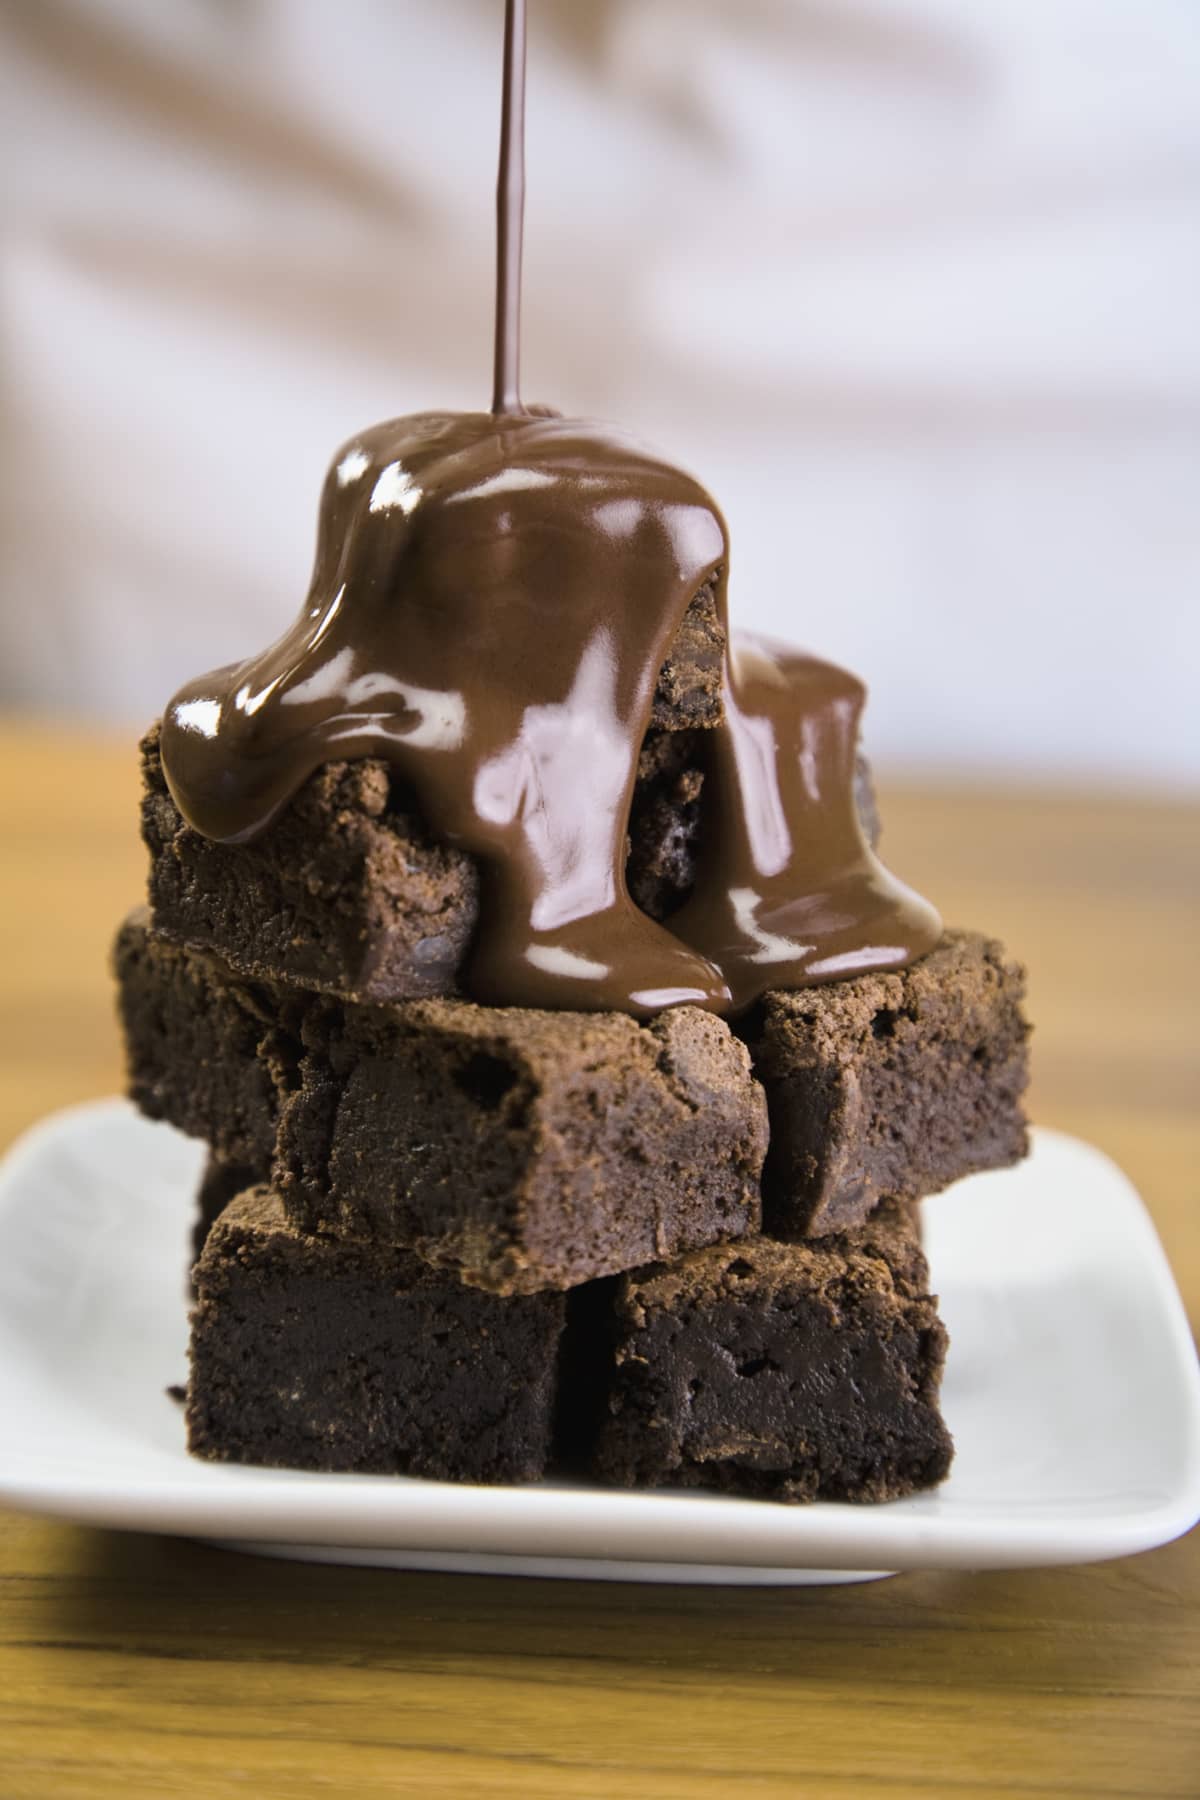 Chocolate brownies with hot fudge